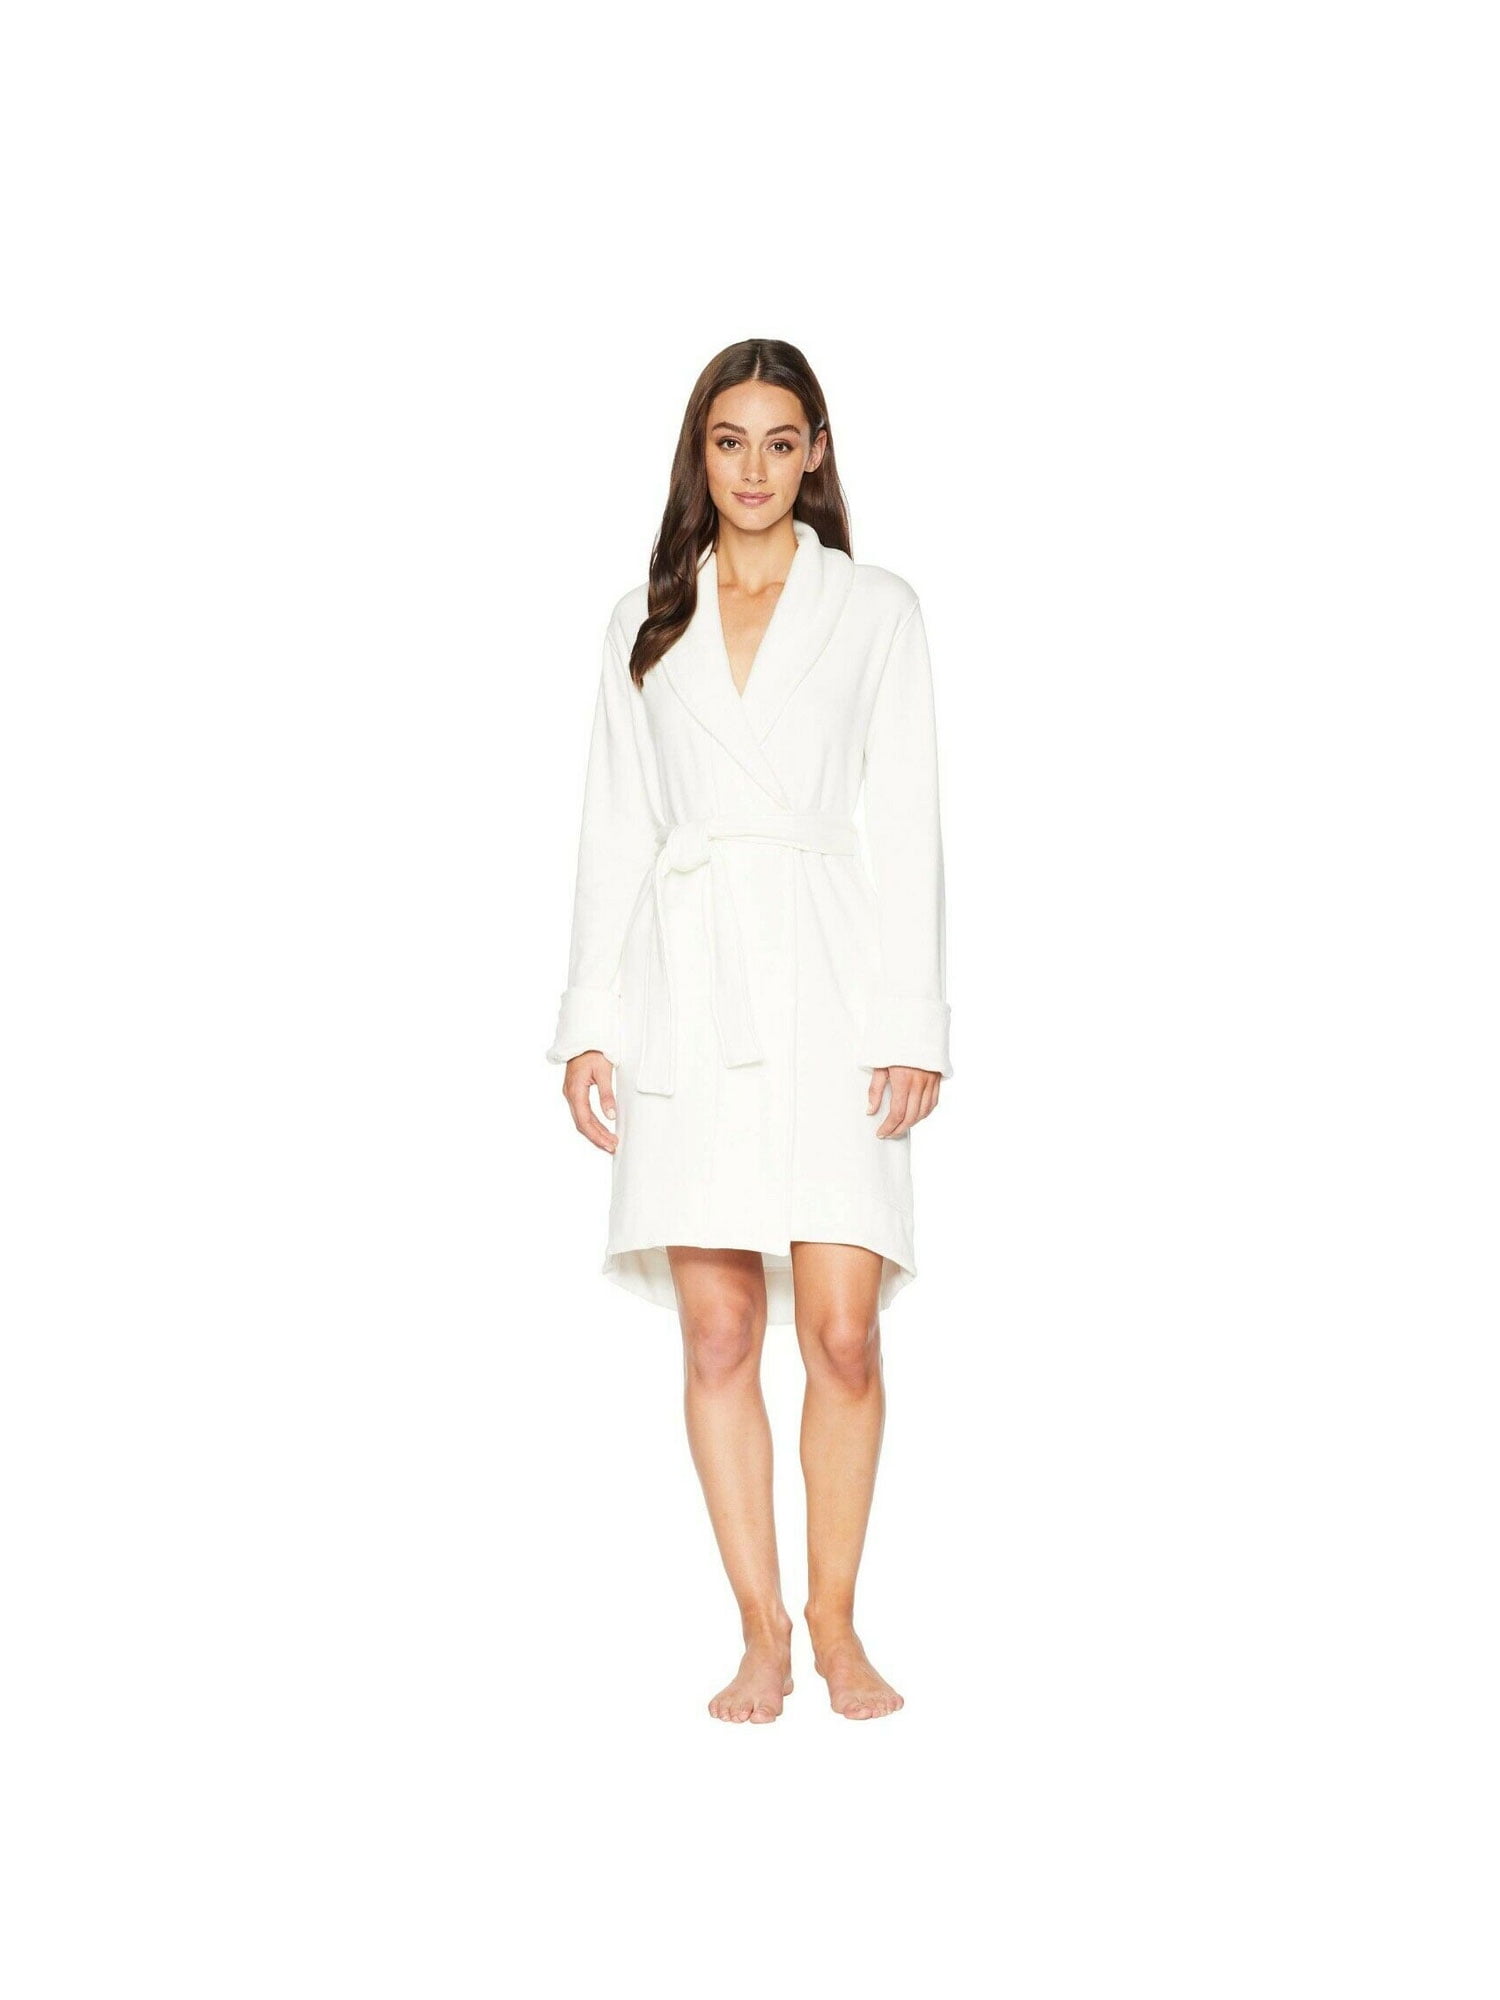 ugg women's blanche robe